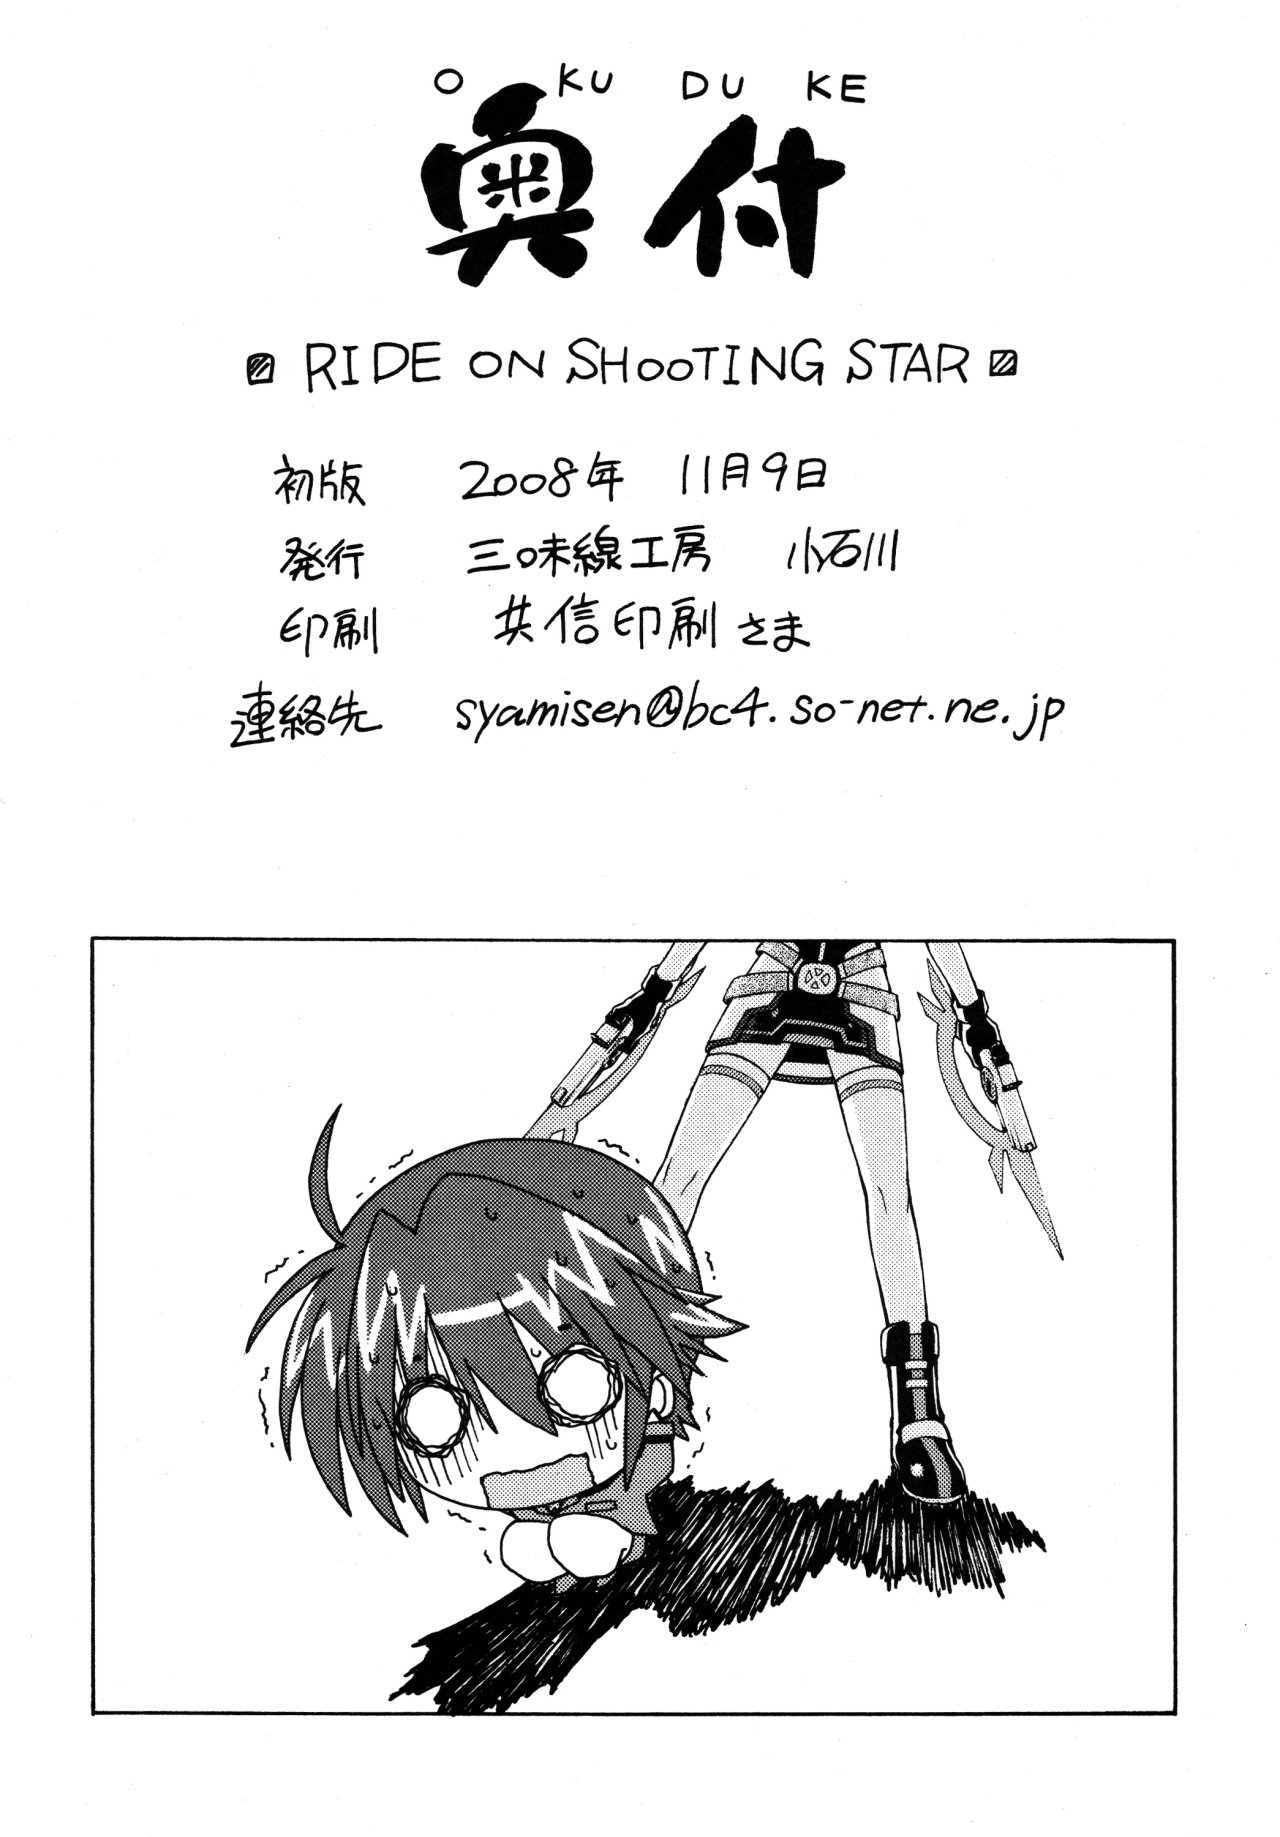 Ride on Shooting Star - 20